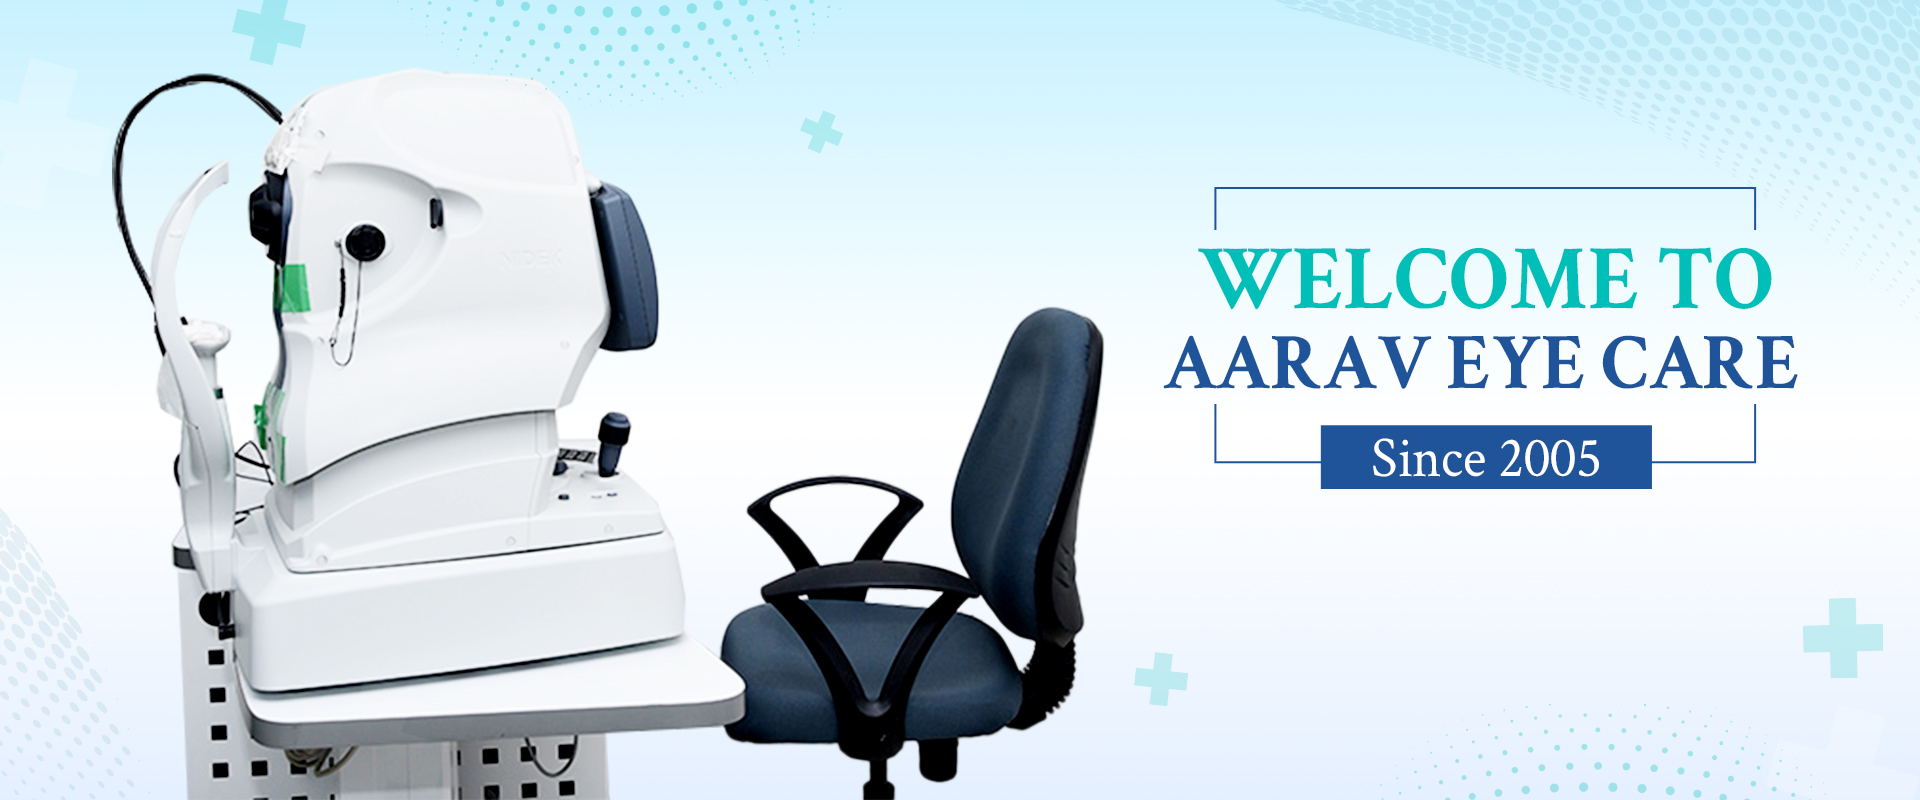 Welcome To Aarav Eye Care